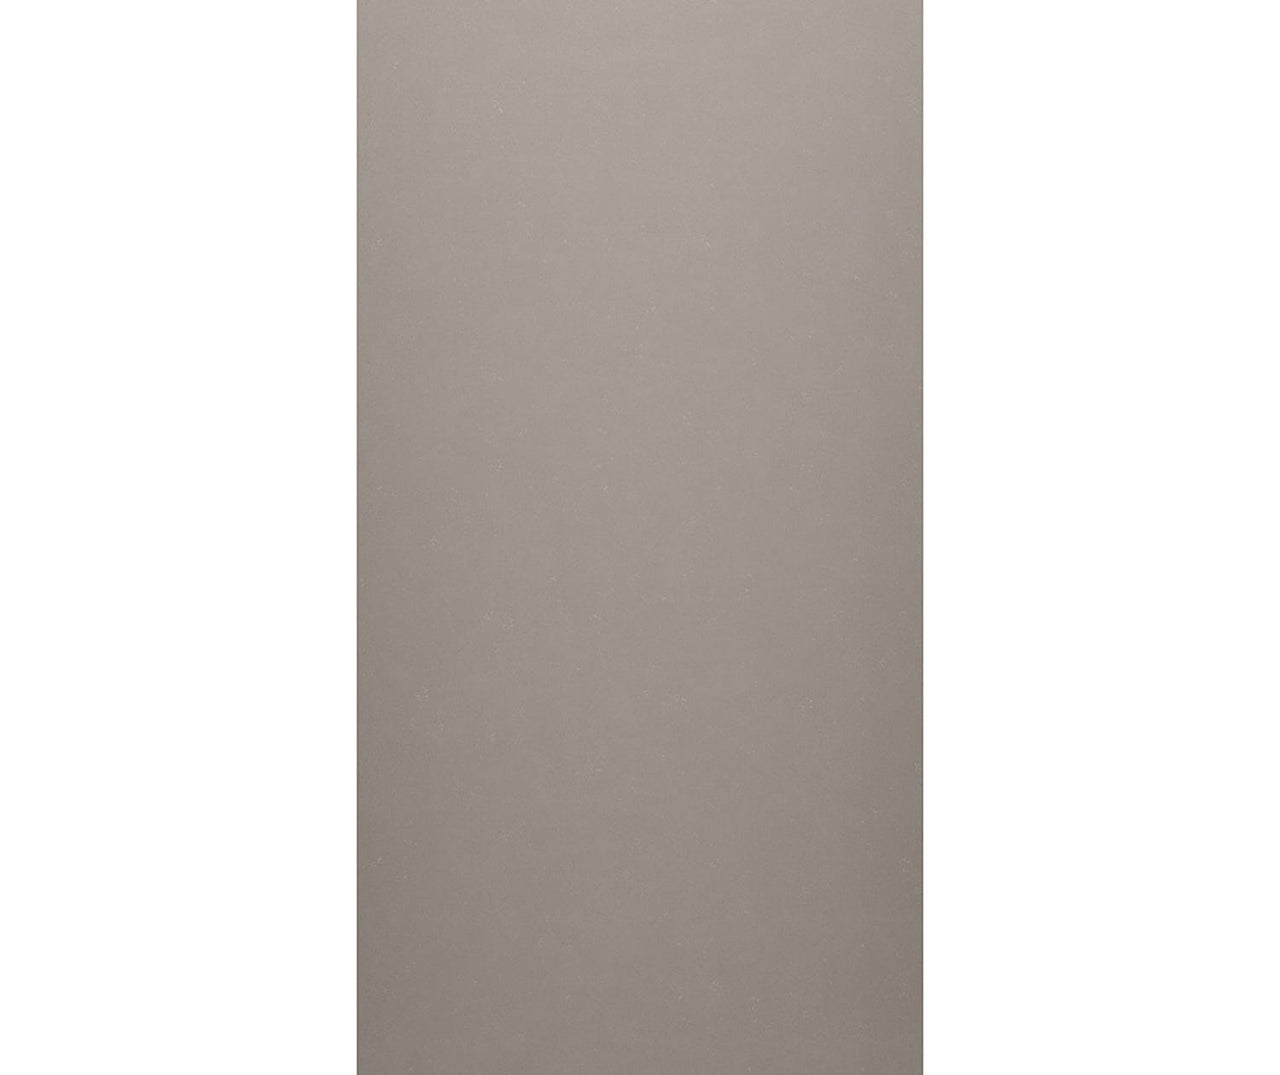 SMMK-7242-1 42 x 72 Swanstone Smooth Tile Glue up Bathtub and Shower Single Wall Panel  - BNGBath